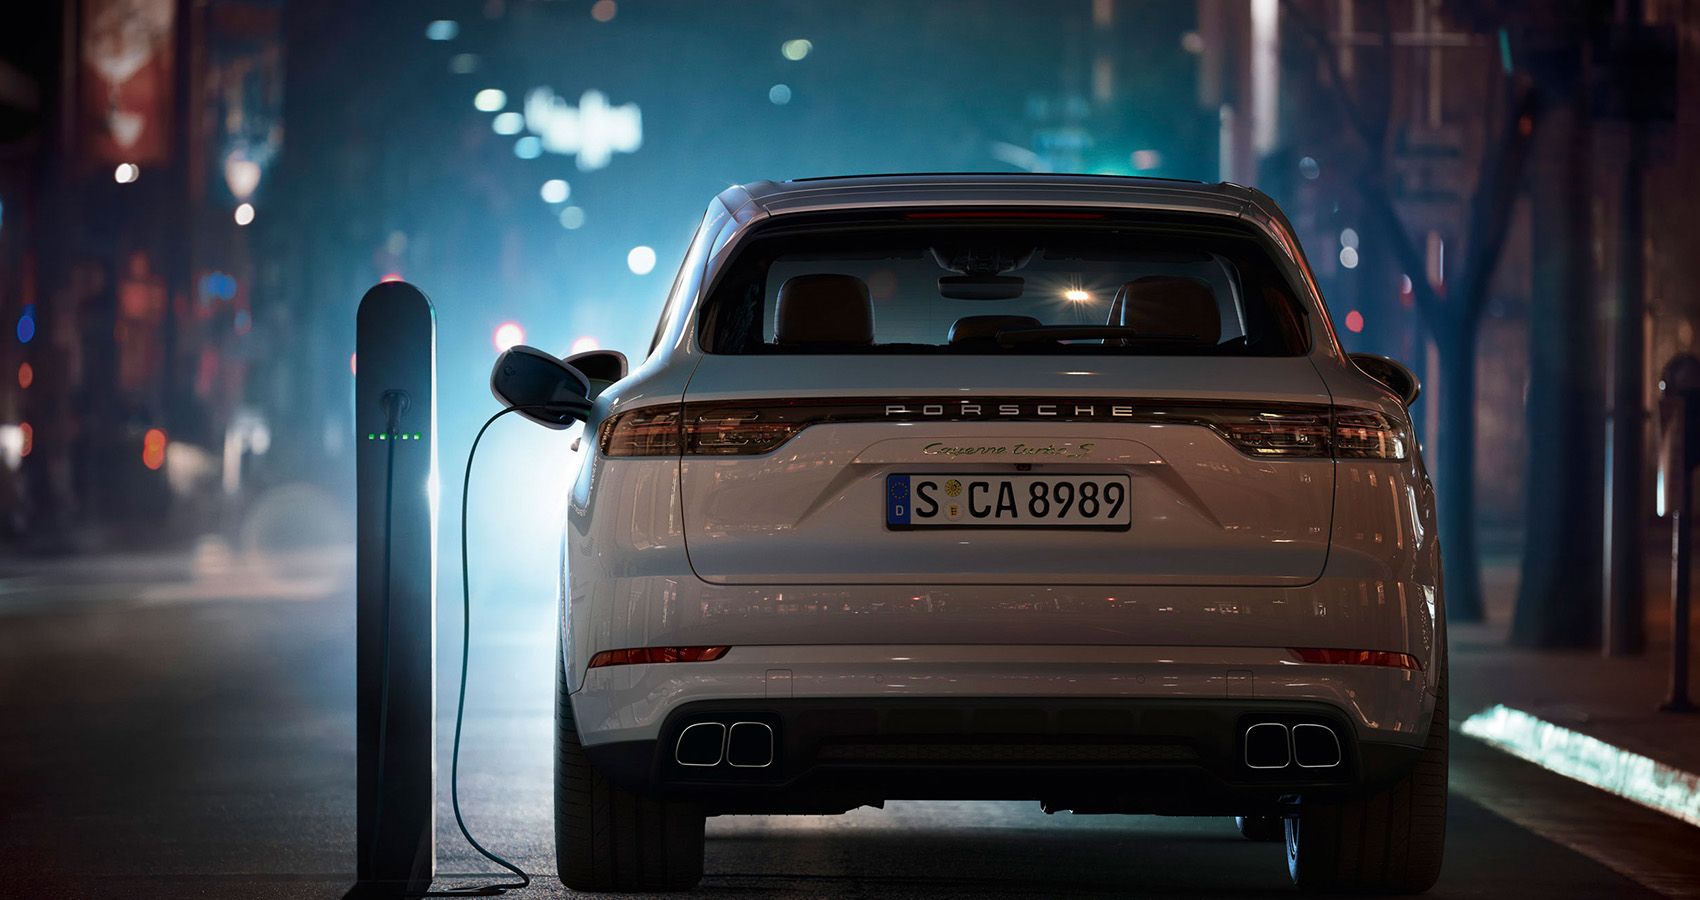 Porsche Cayenne Turbo S E-Hybrid charging at night